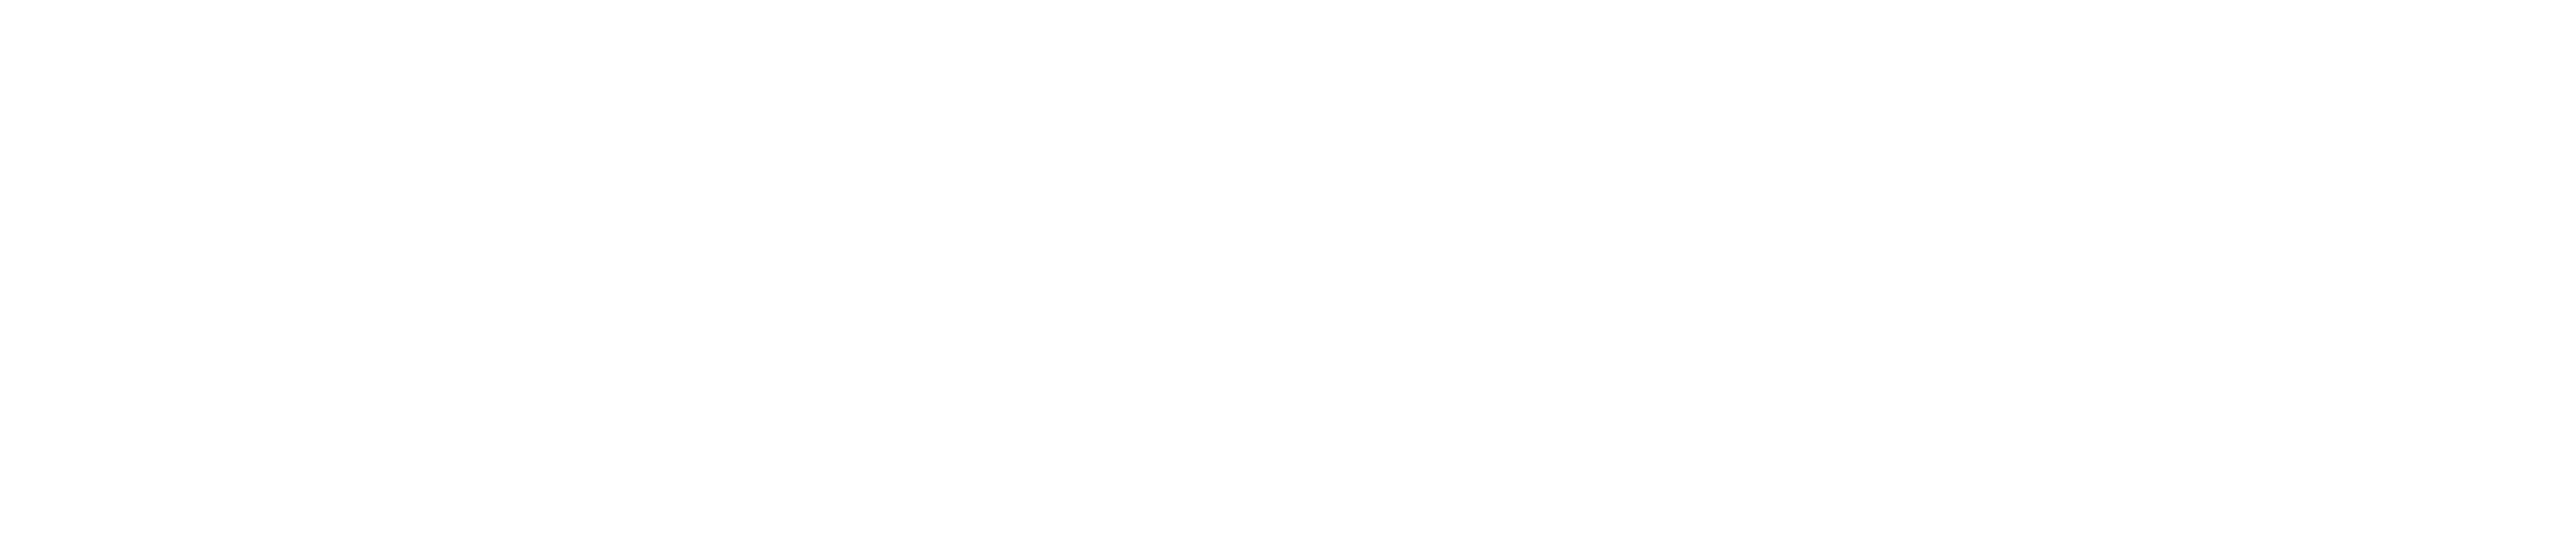 PFF Logo